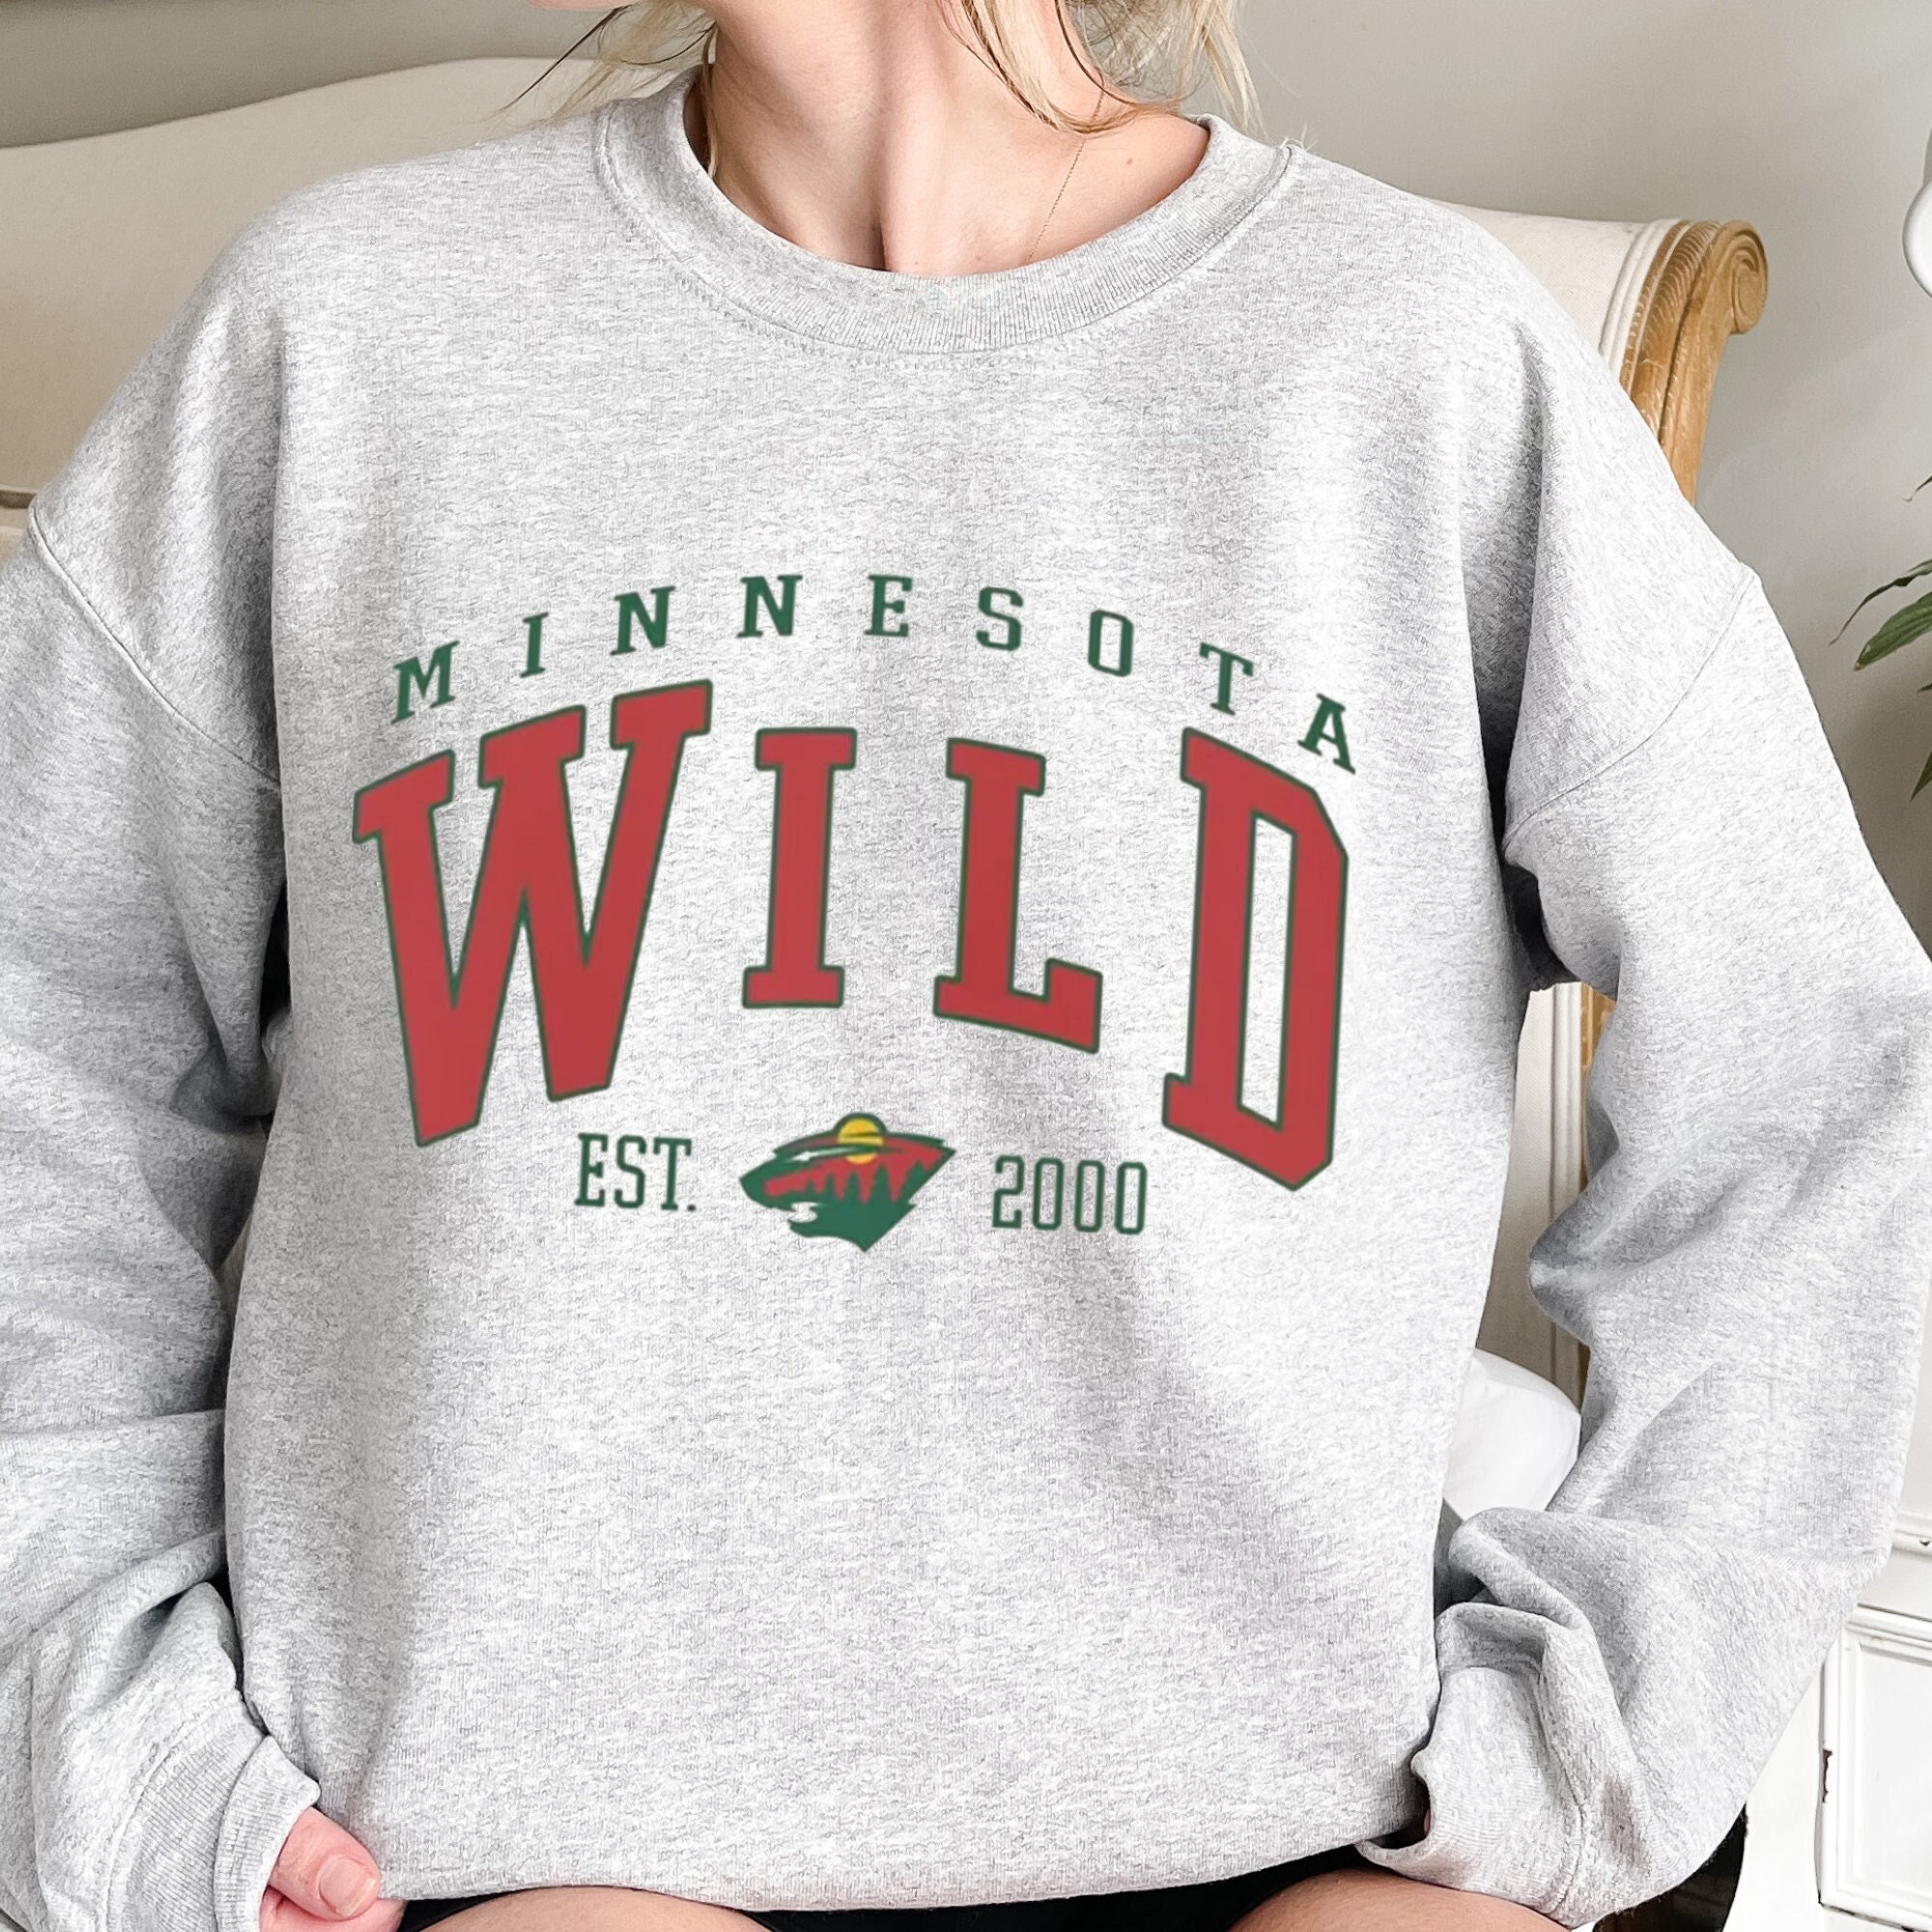 Men's Minnesota Wild Gear & Hockey Gifts, Men's Wild Apparel, Guys' Clothes